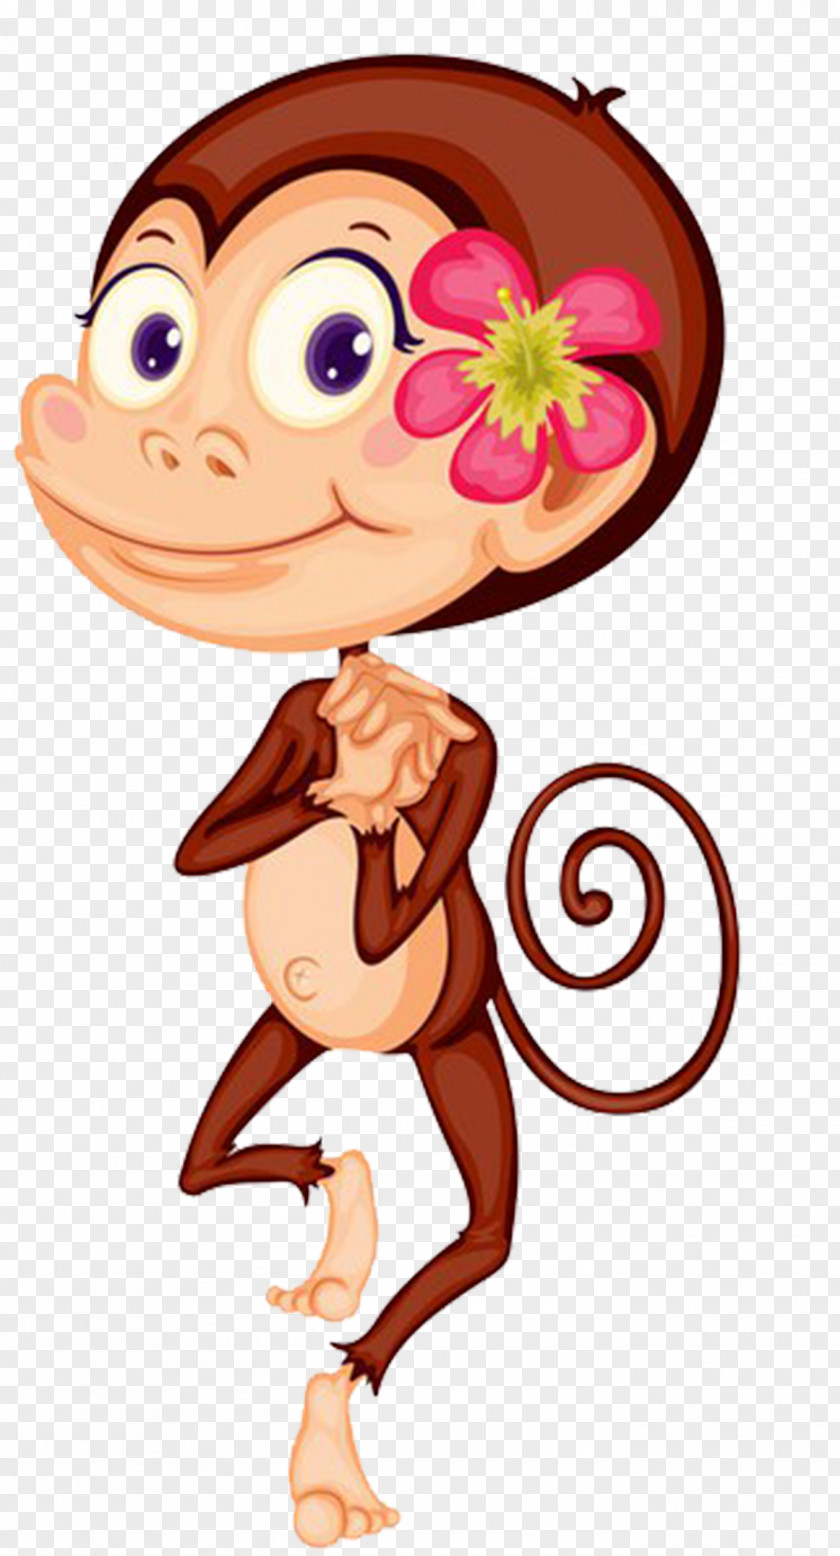 US Monkeys Monkey Royalty-free Illustration PNG